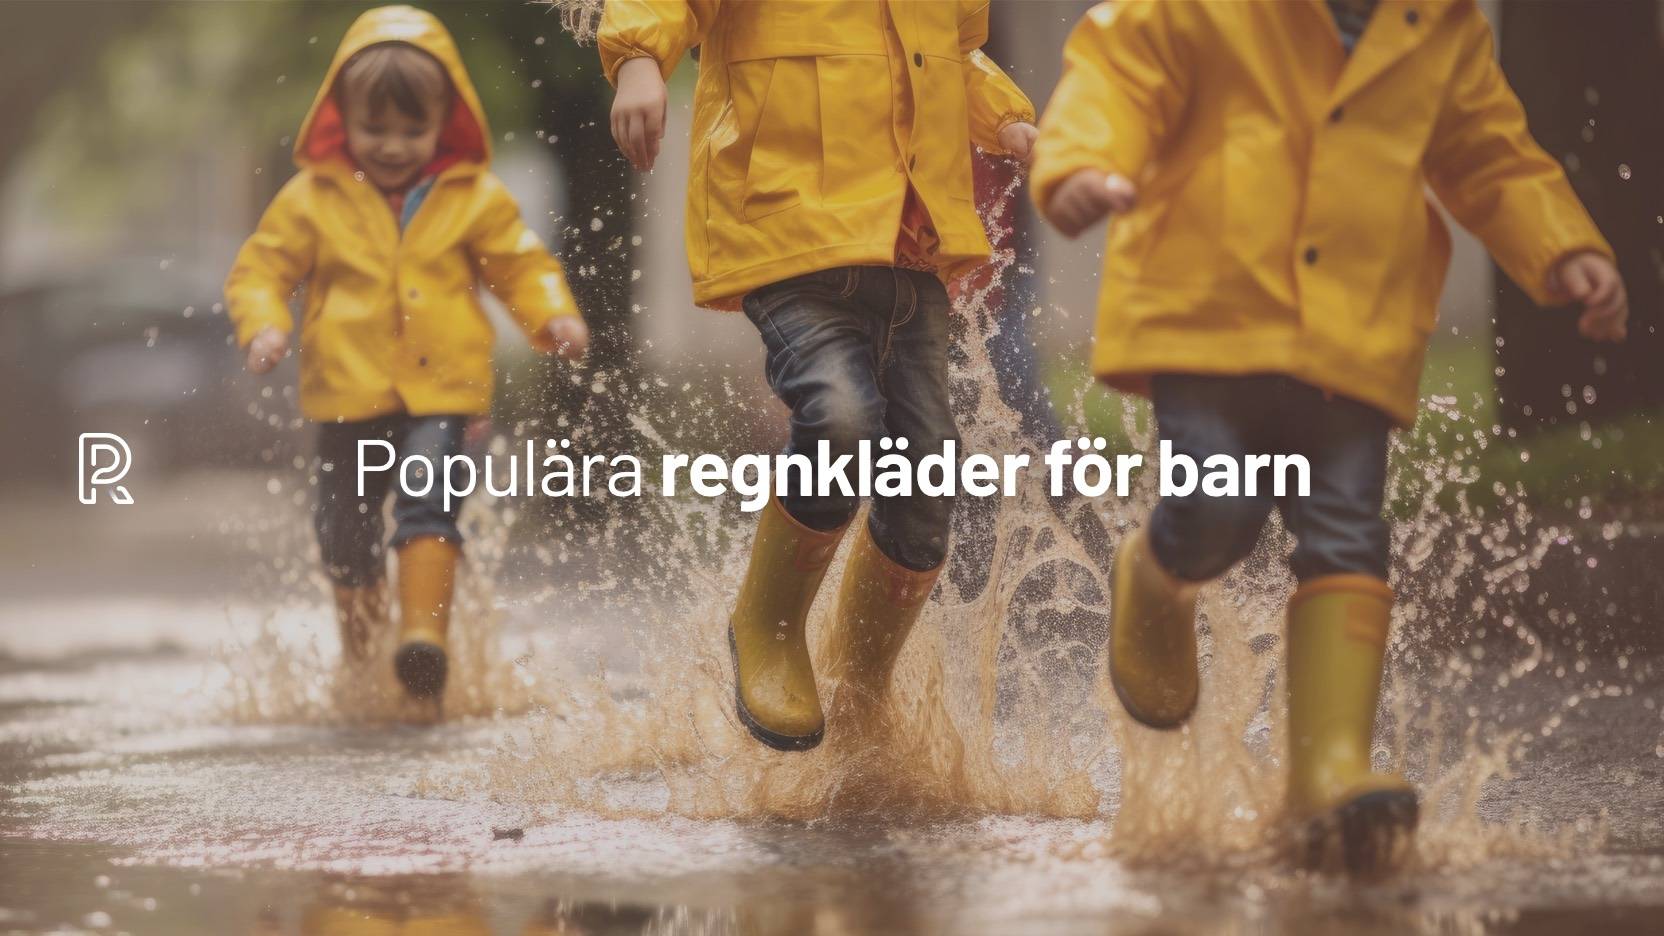 Populära regnkläder under 500 kr